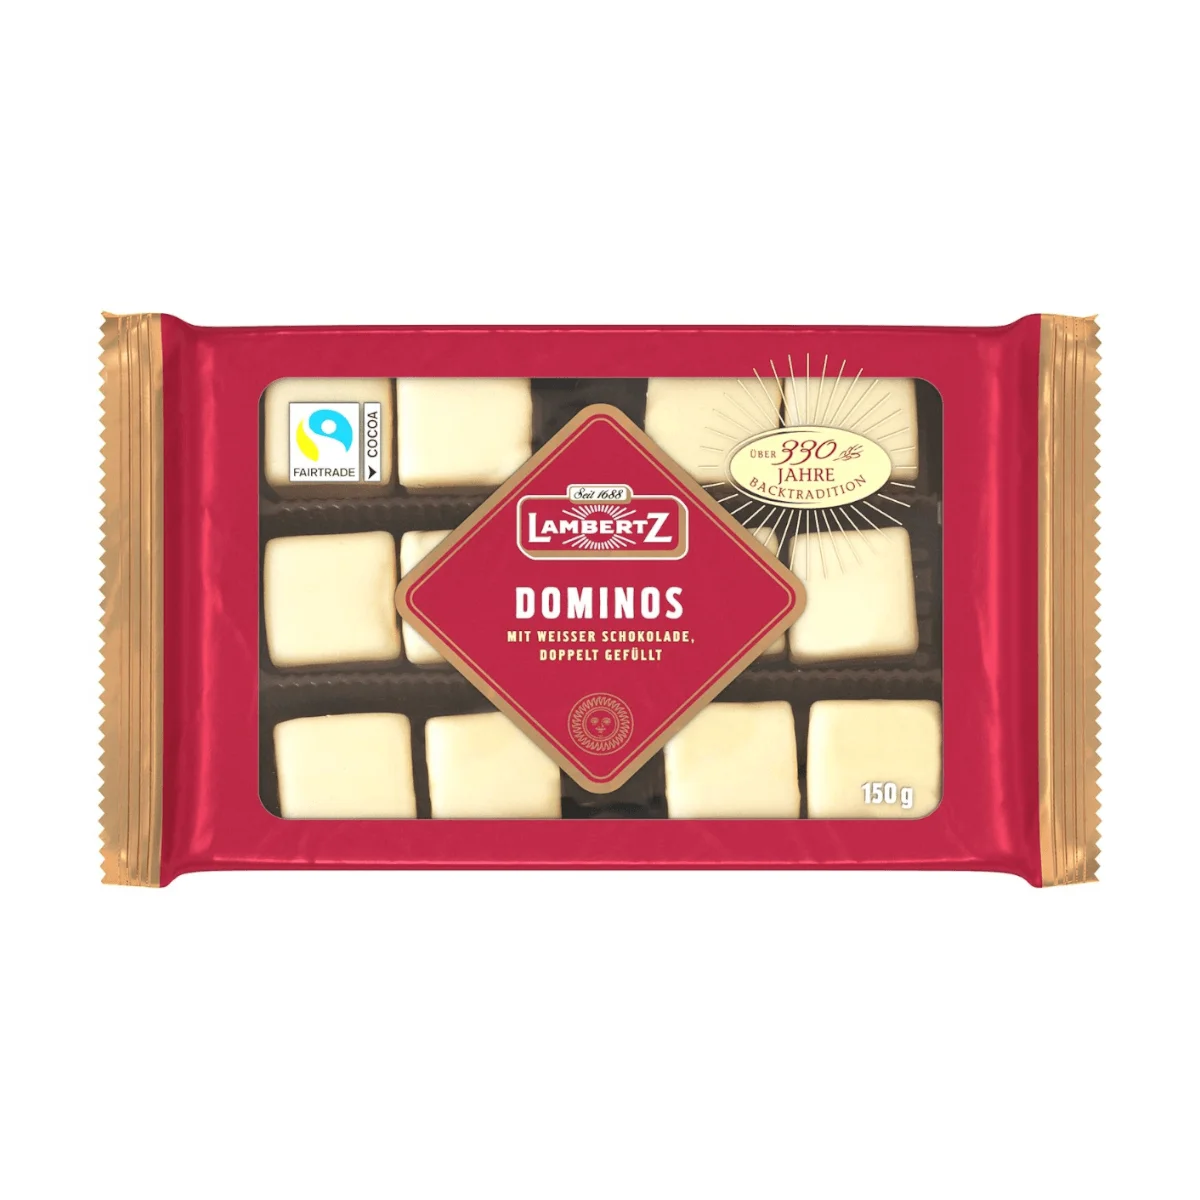 Lambertz Dominos Weiße Schokolade, 150 g